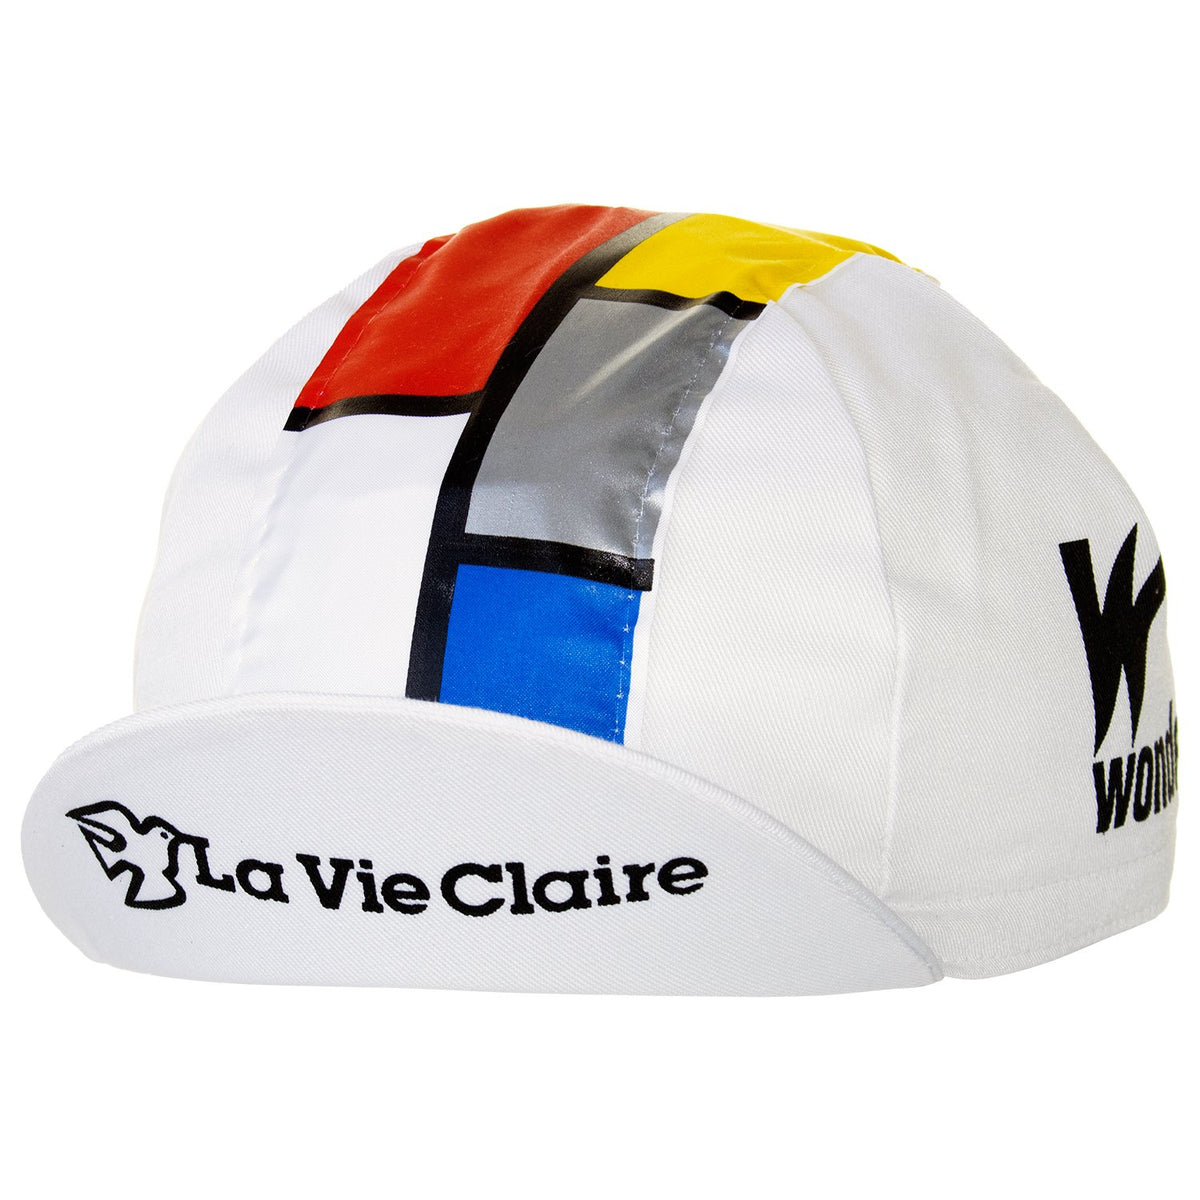 La Vie Claire Vintage Team Cycling Cap Cento Cycling